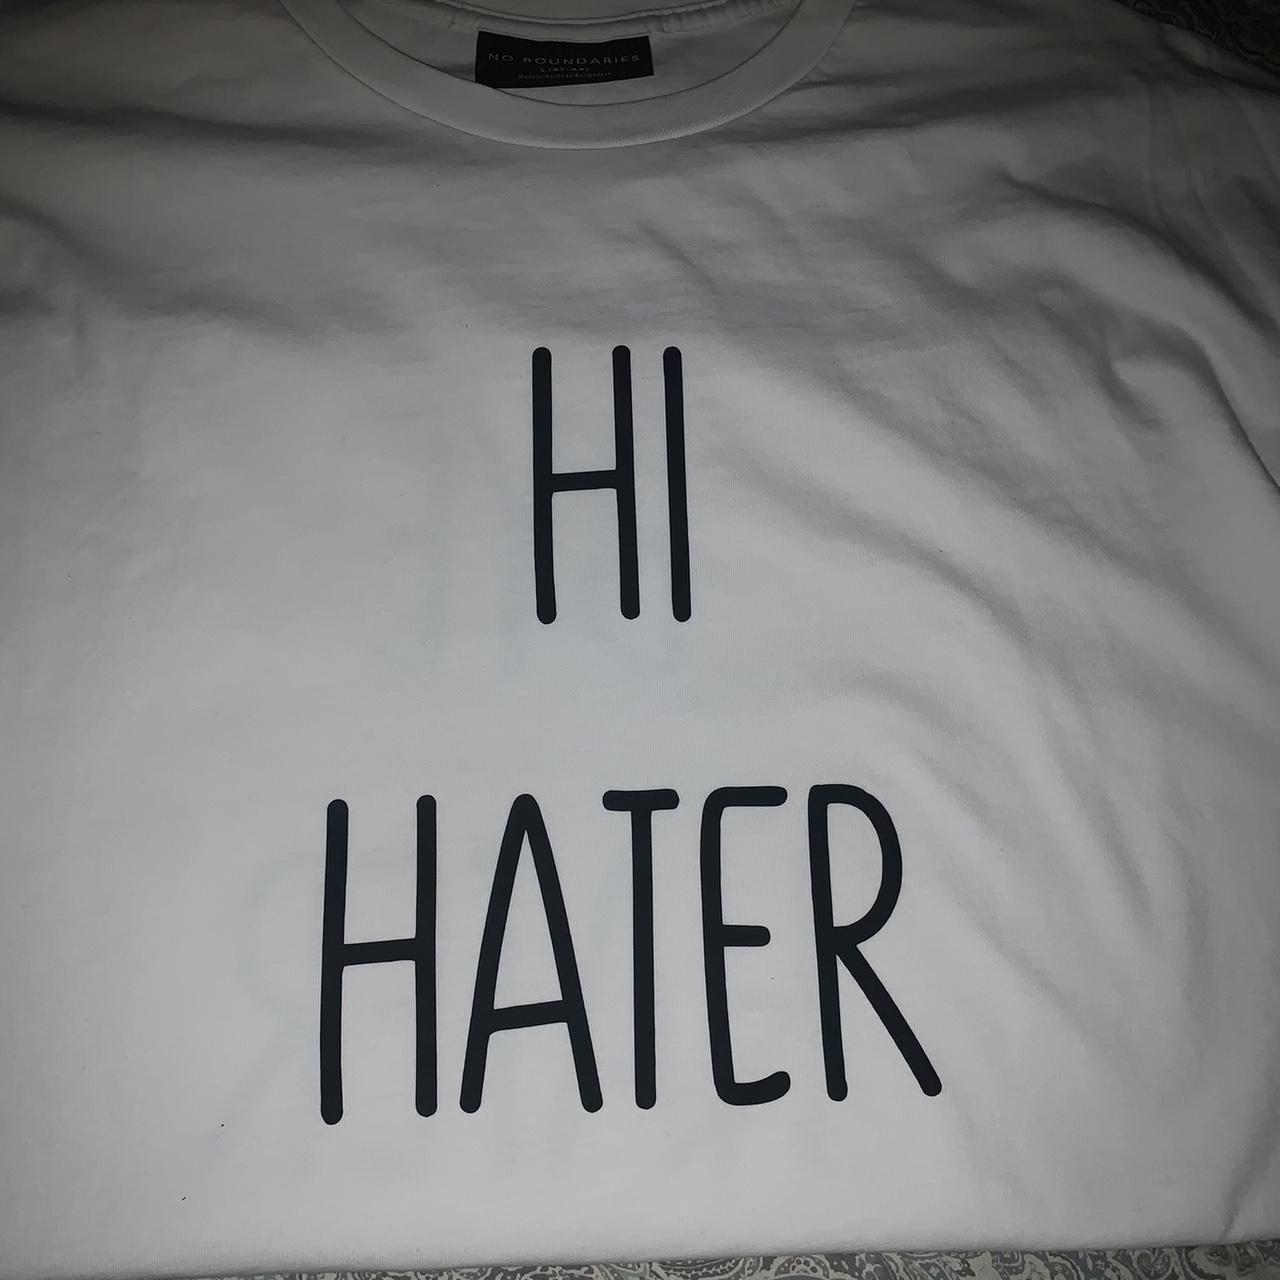 Hi Hater 2 Men's T-Shirt